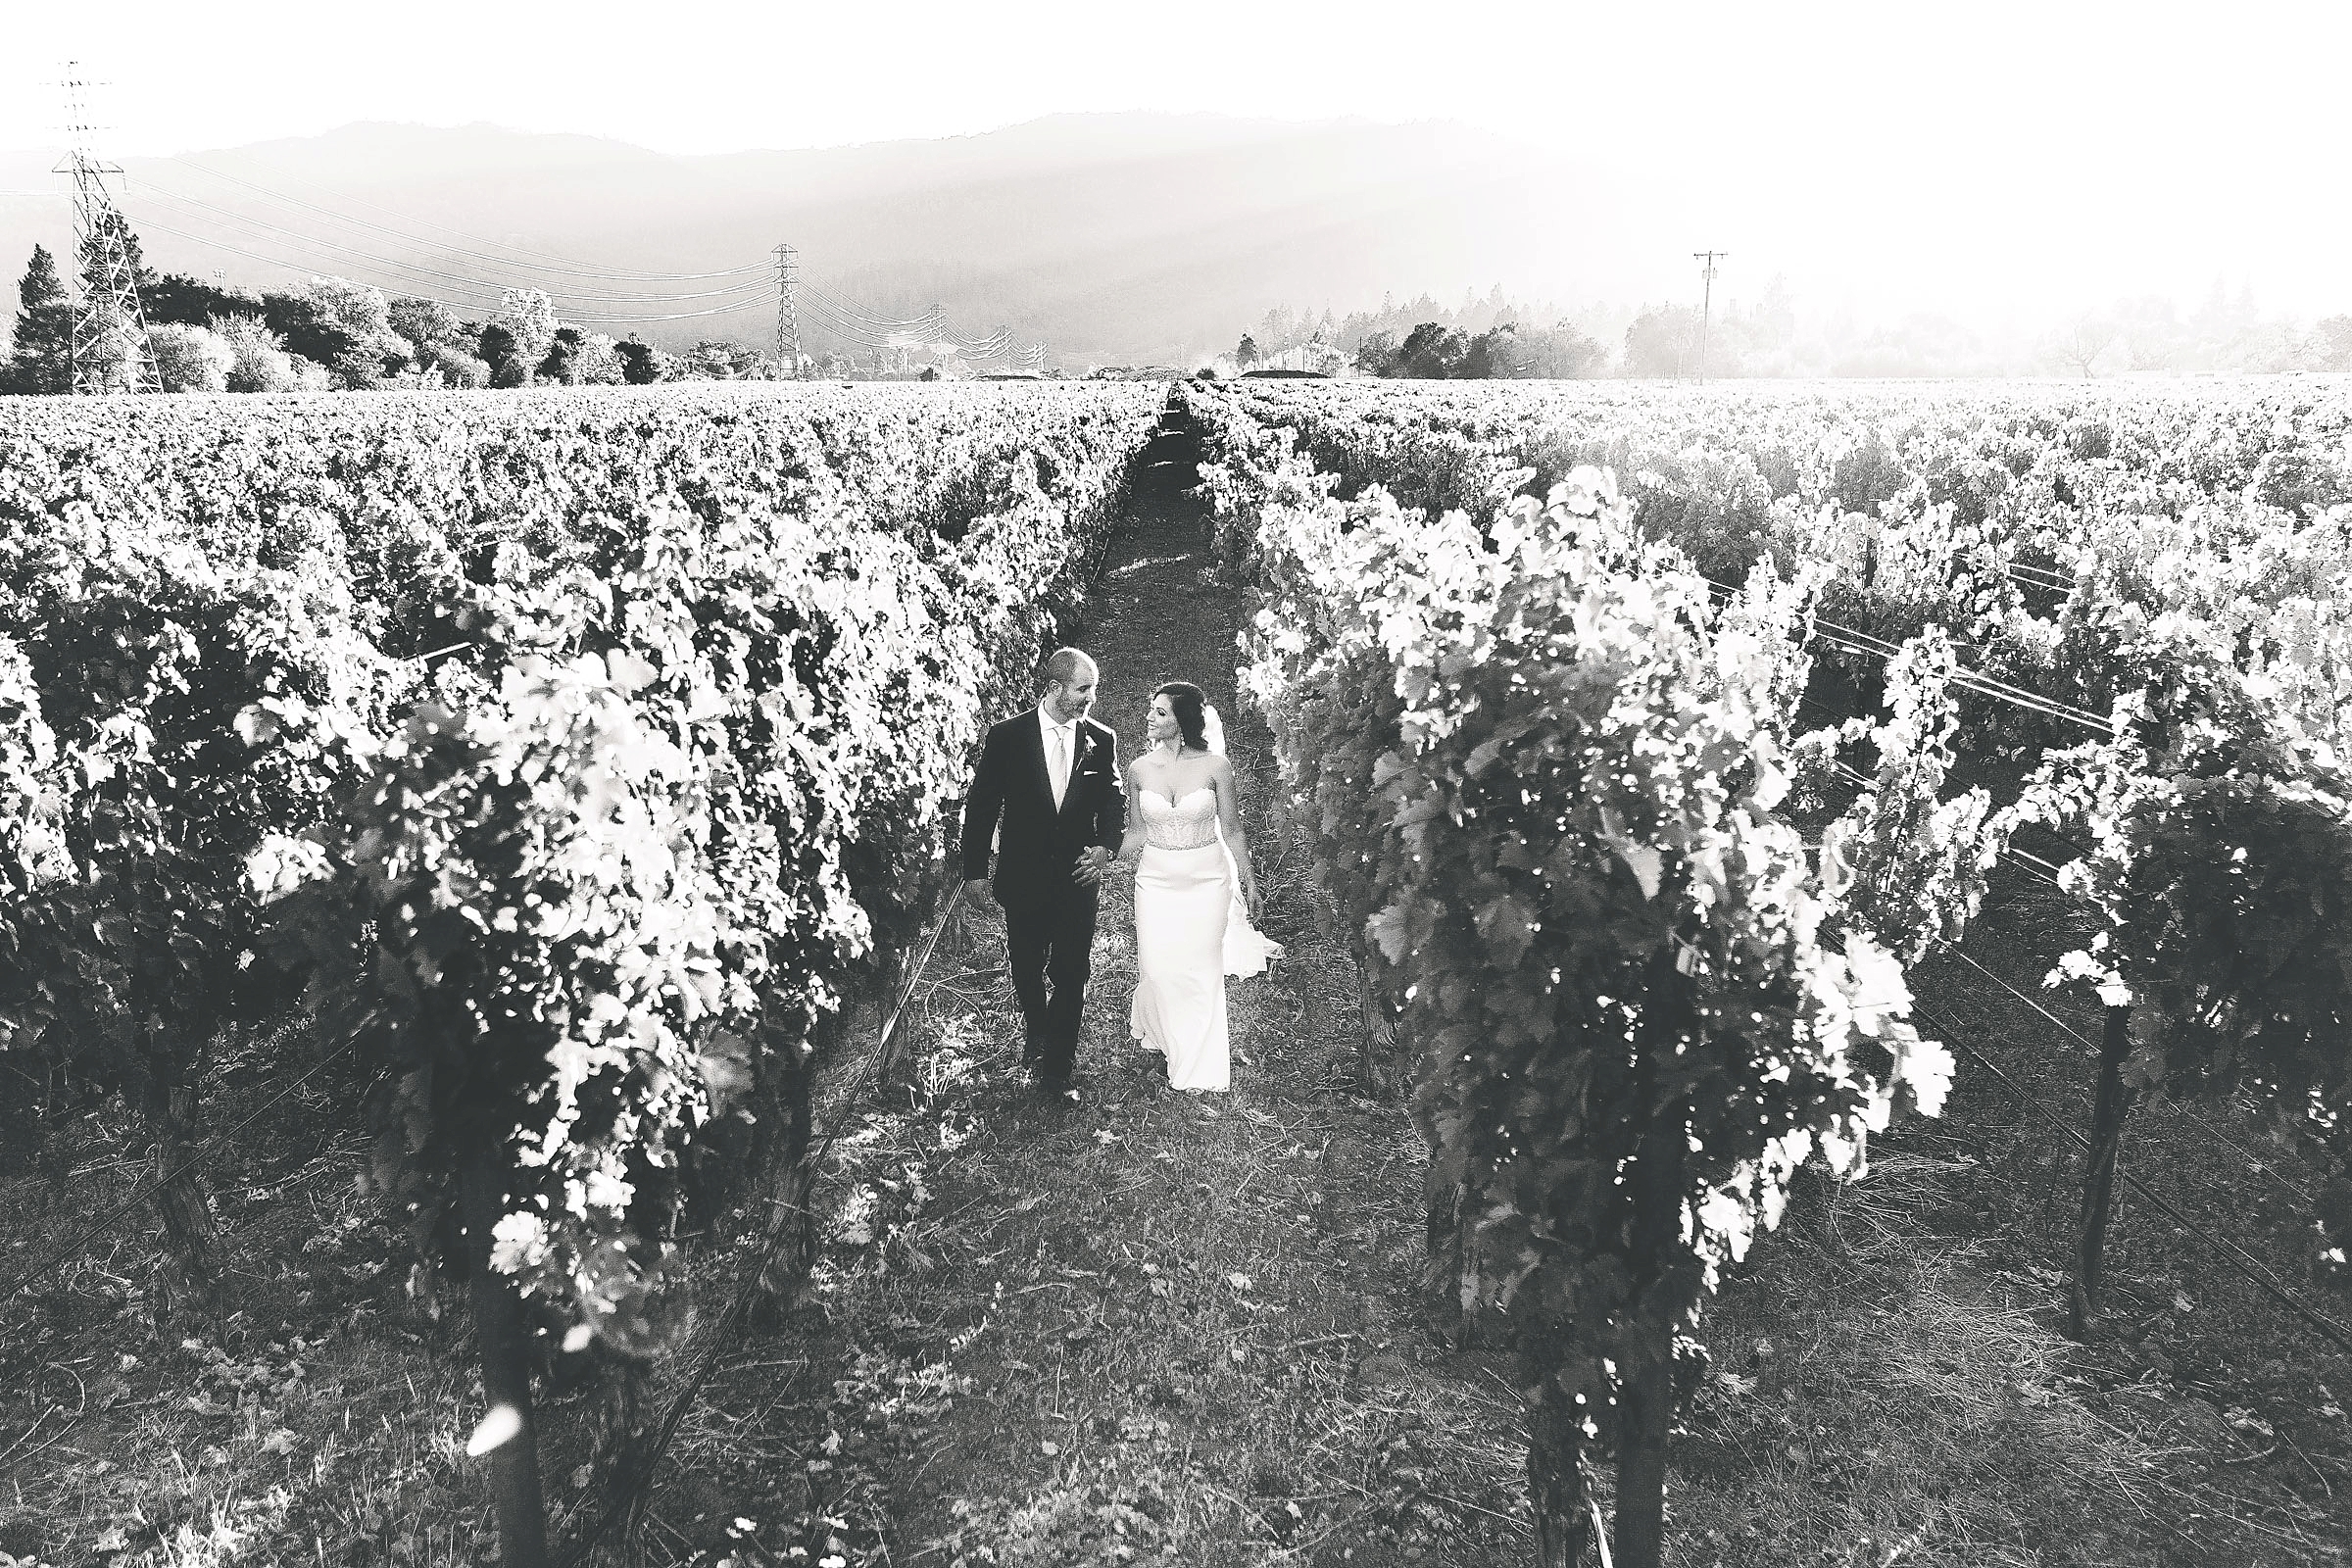 Napa Valley Saint Helena Vineyard Destination Elopement Wedding California